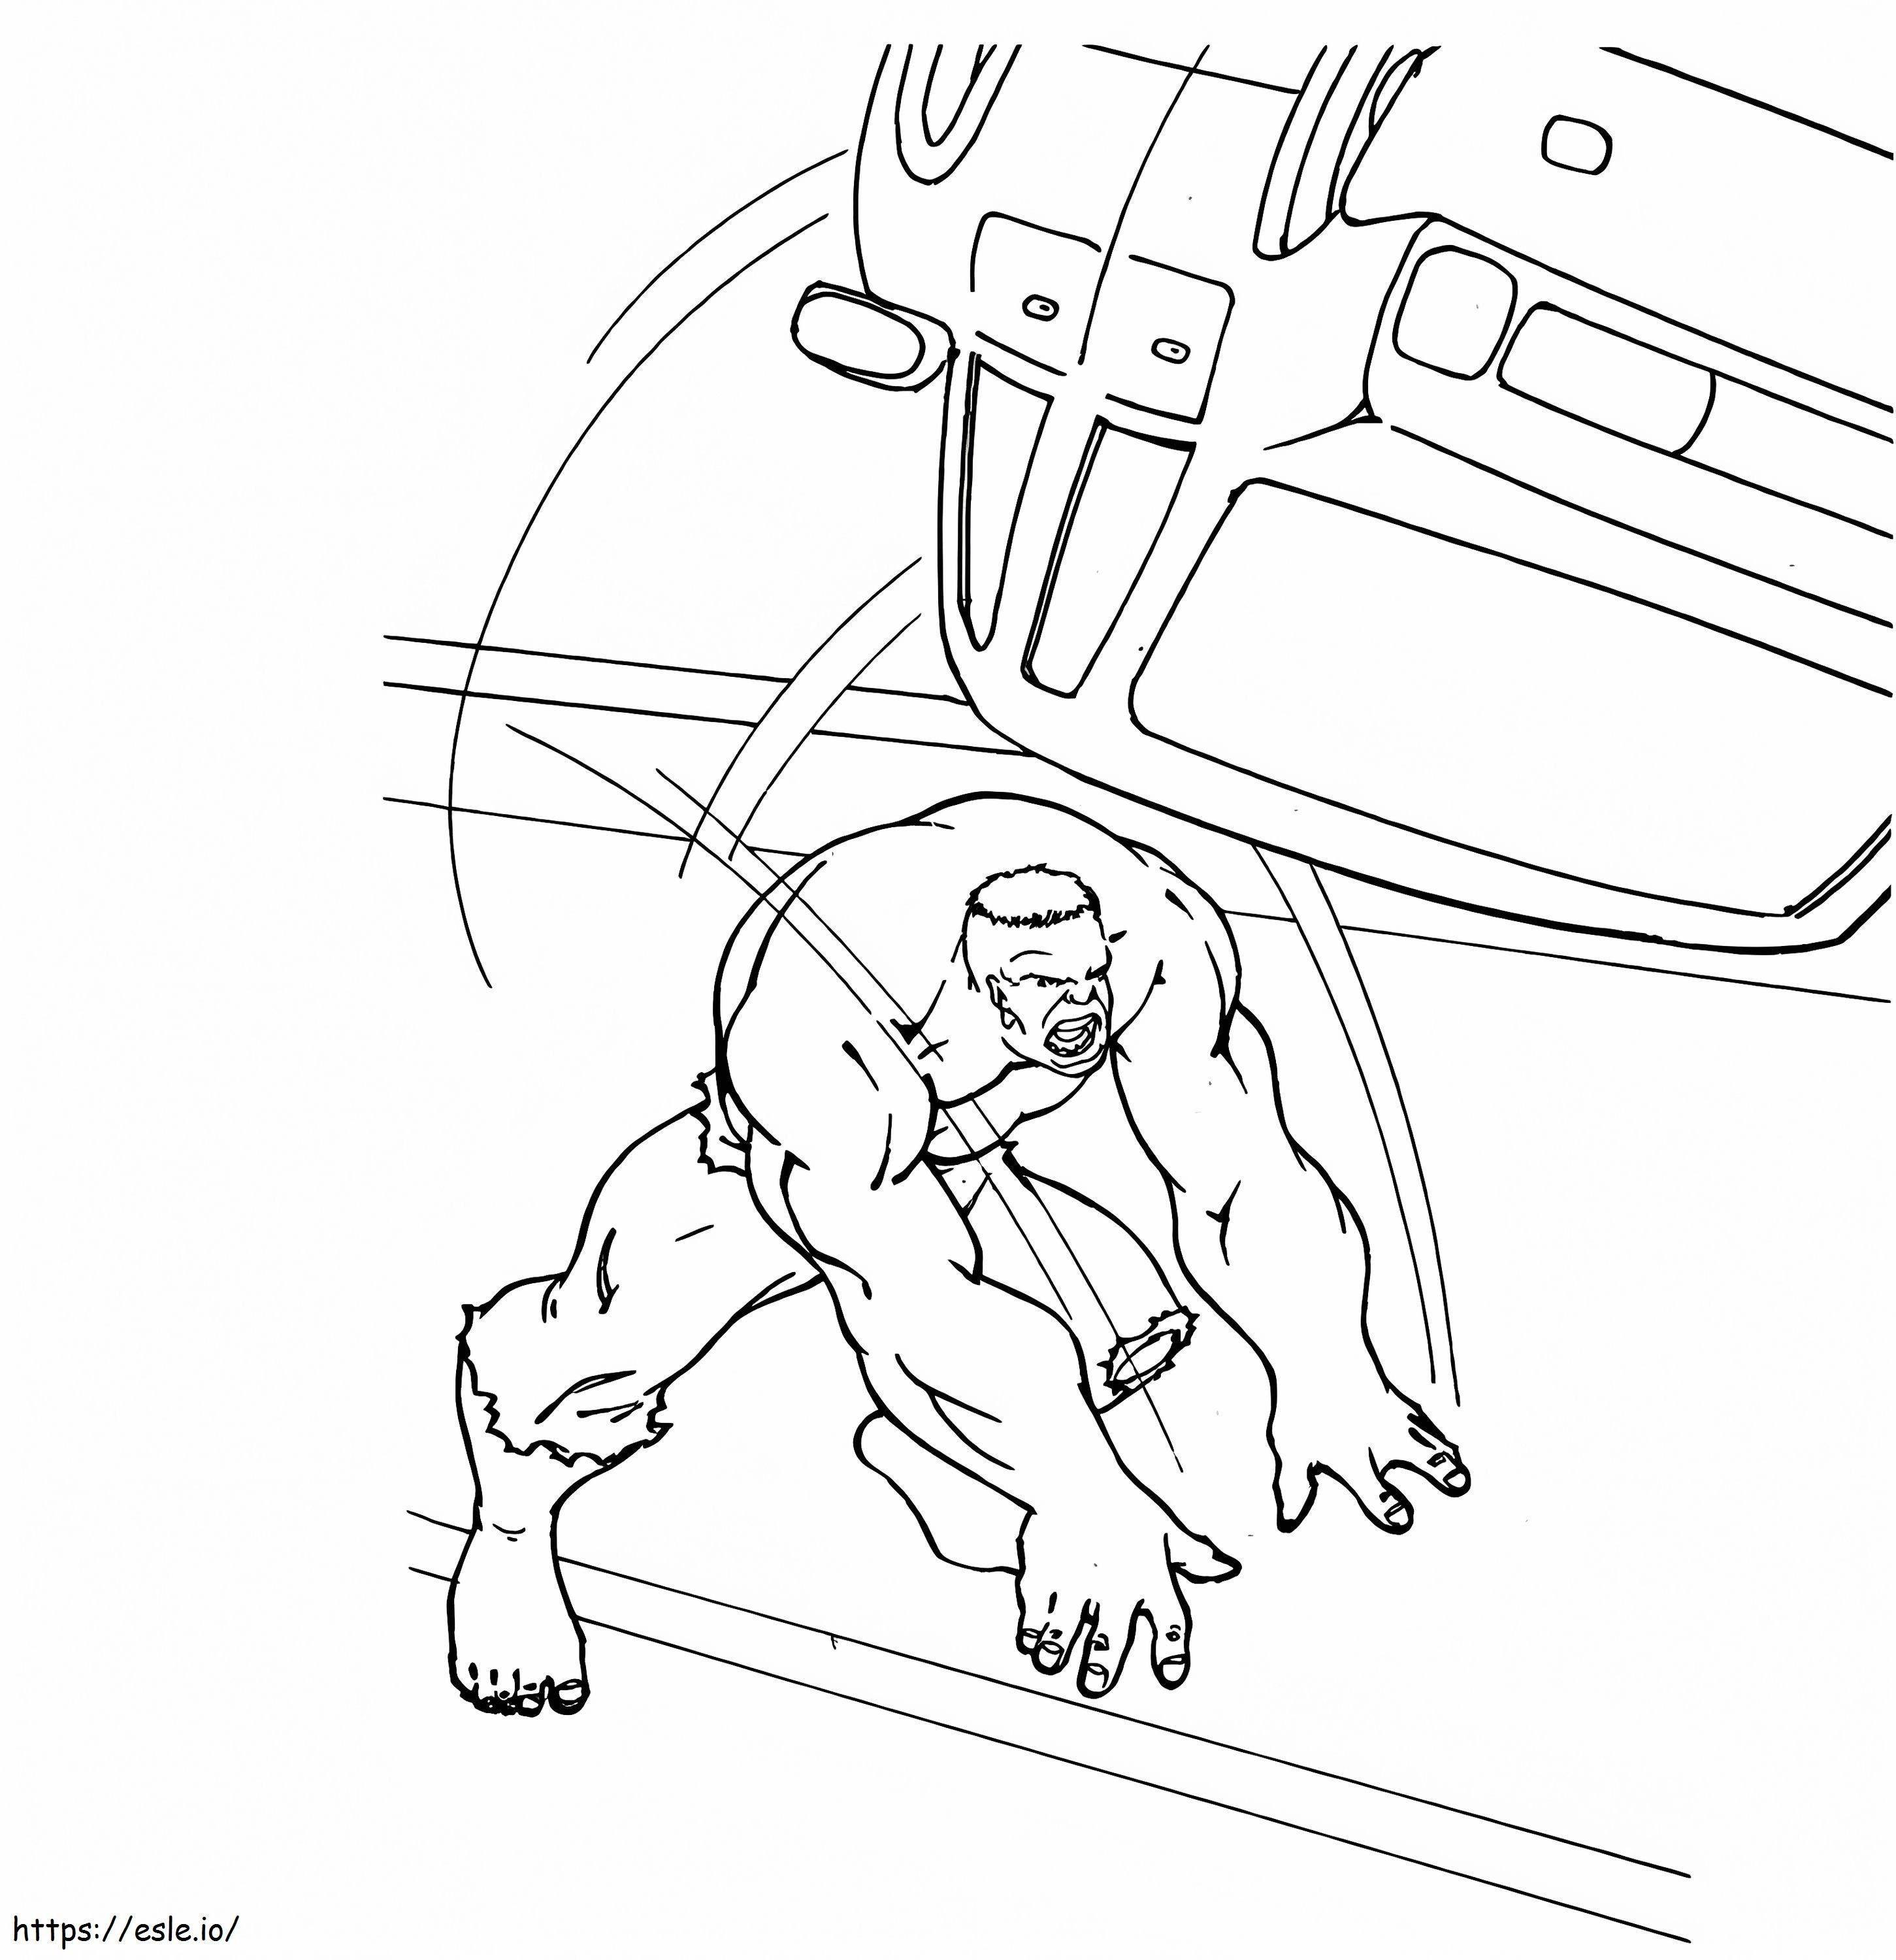 1562292687_Hulk Throwing Car A4 coloring page